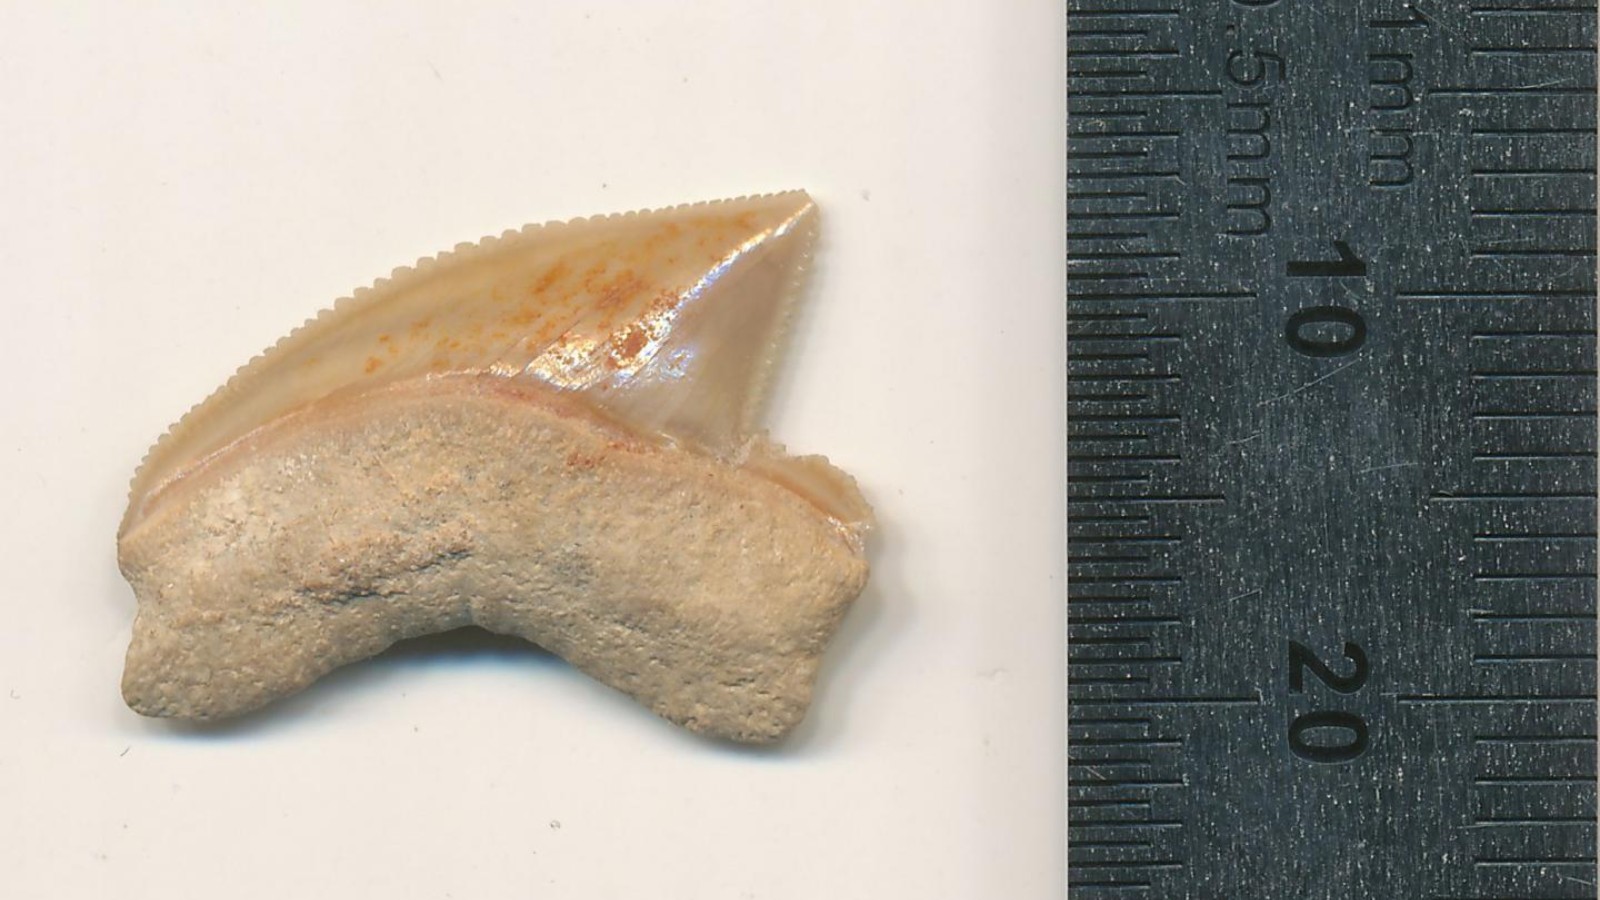 Shark tooth found in Jerusalem’s City of David. Photo by Omri Lernau